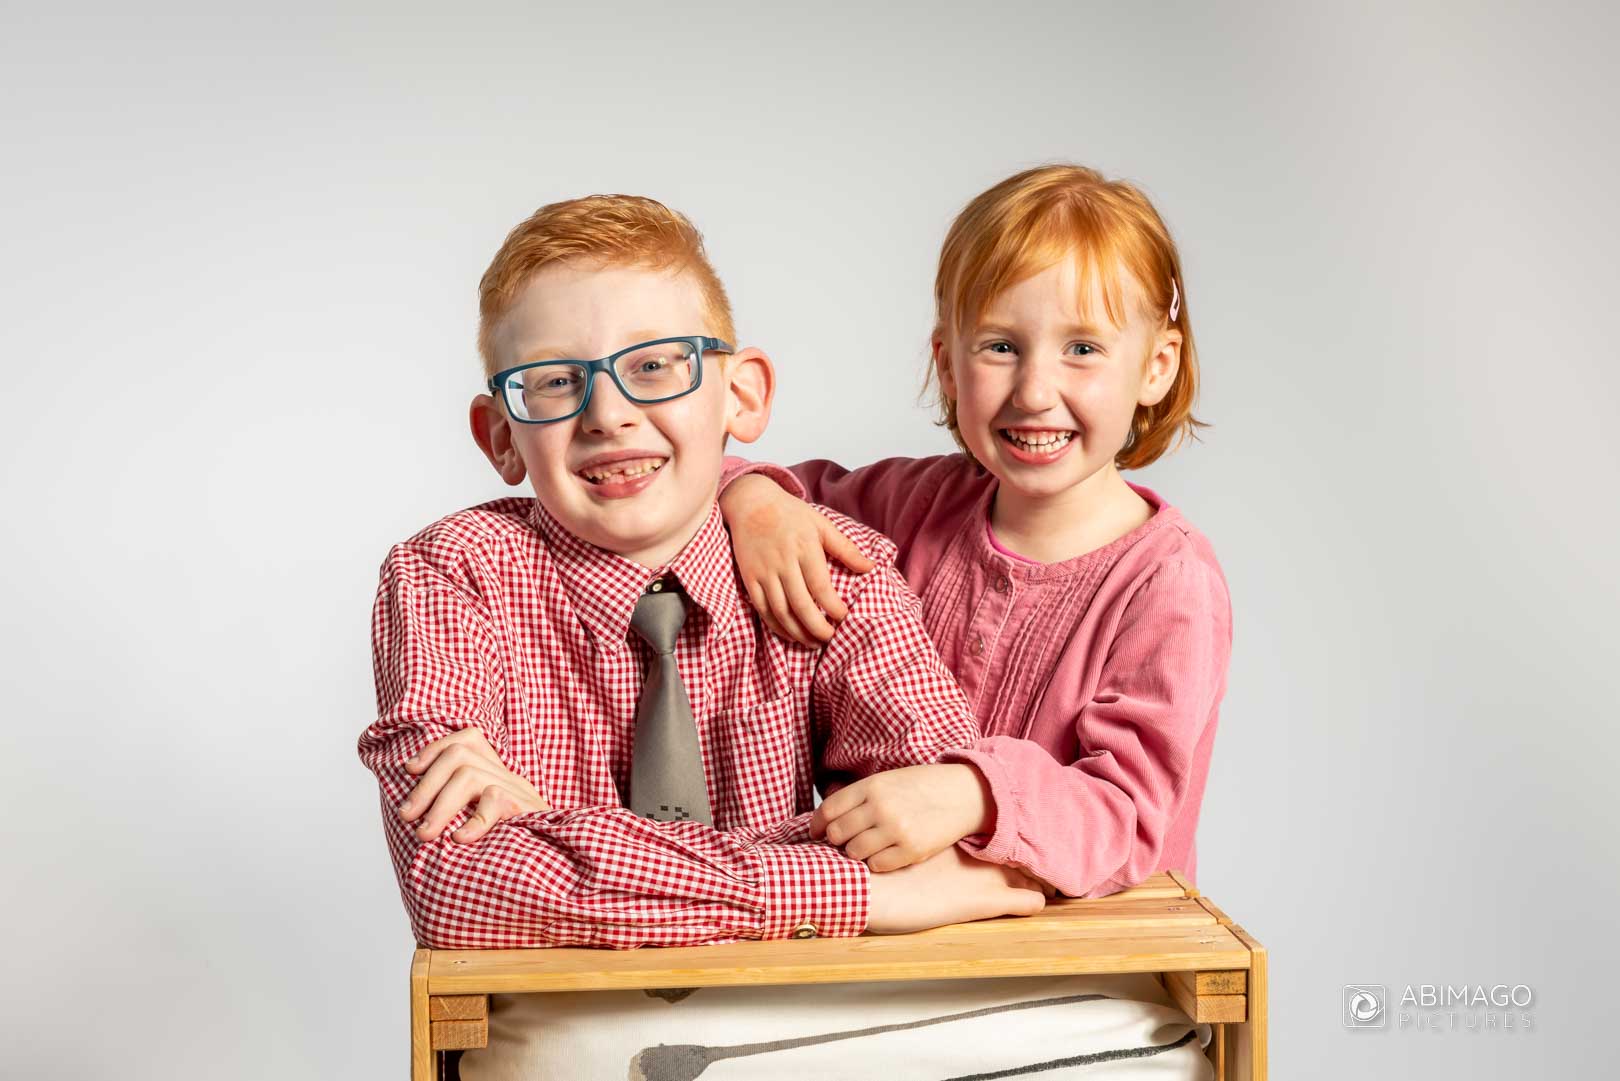 Zwei Kinder fotografiert im Studio Geschwister-Fotoshooting